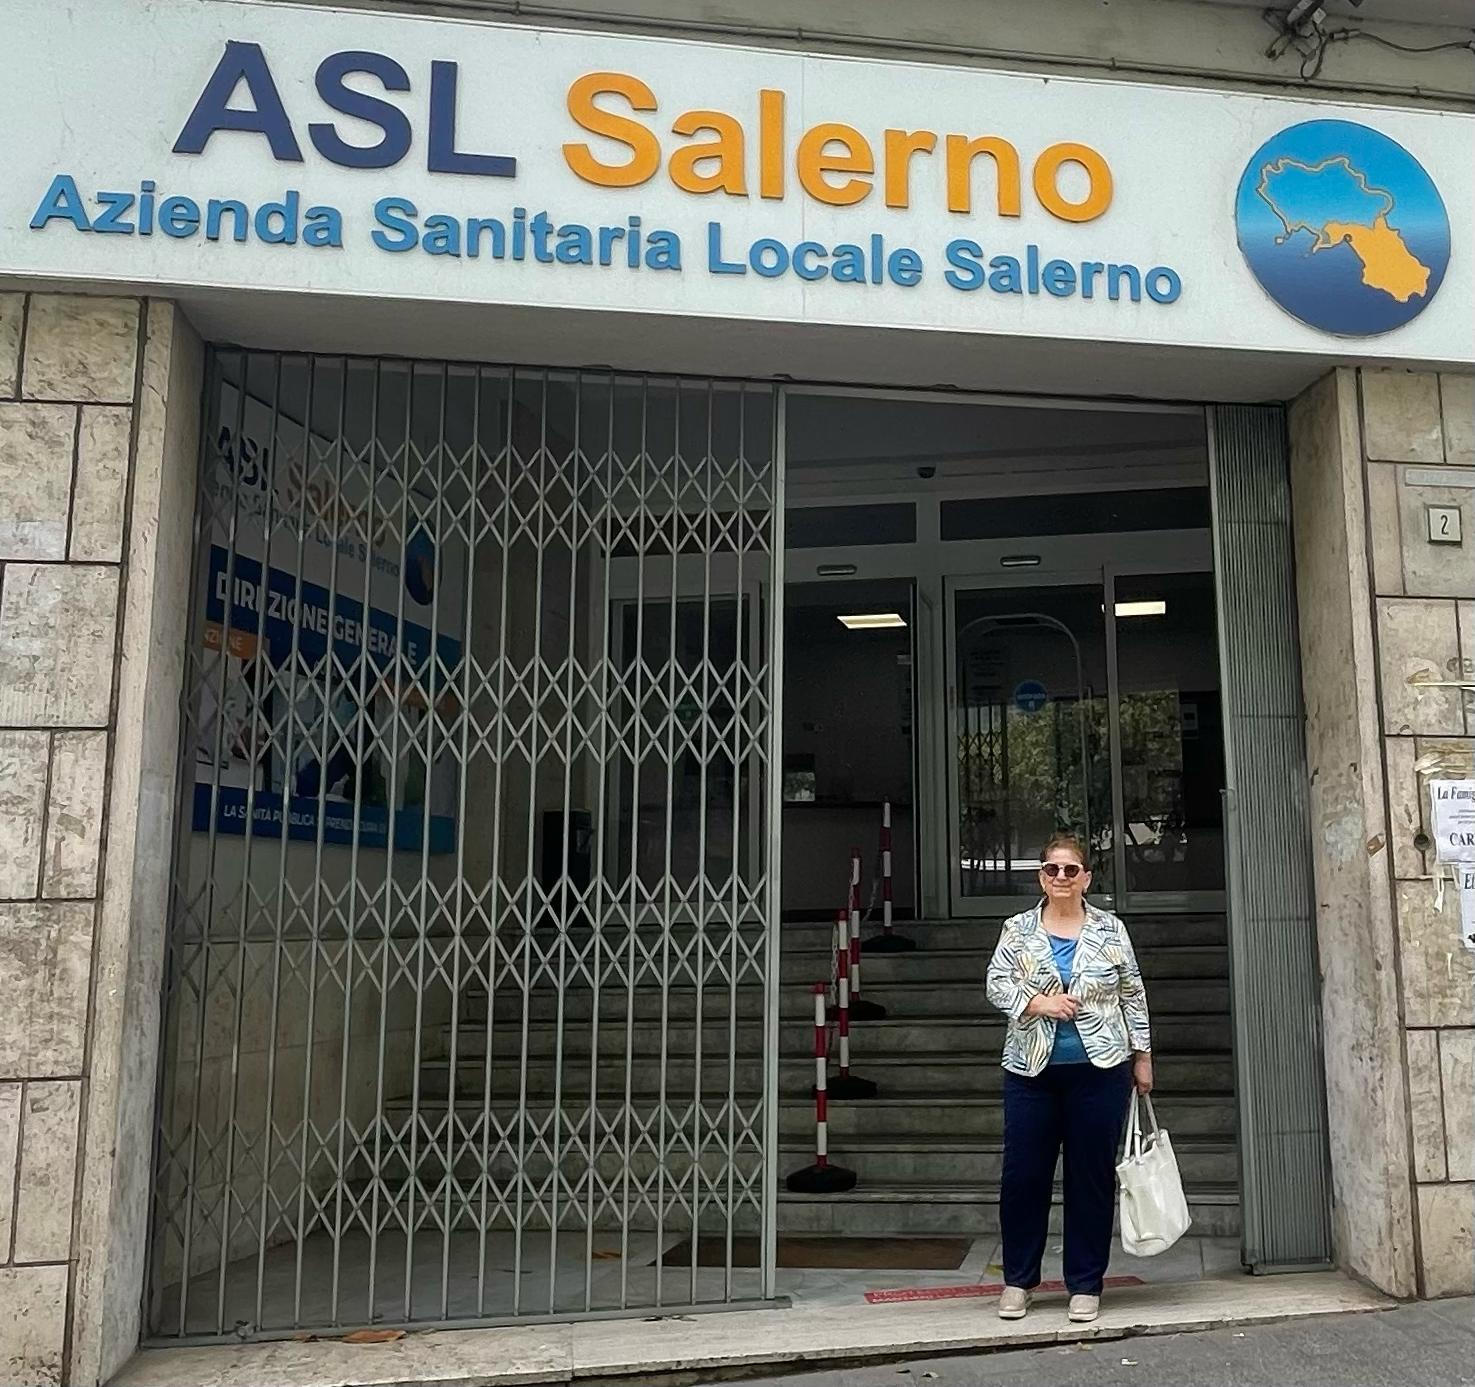 Salerno: Asl, abbattimento liste d’ attesa, video per canali social